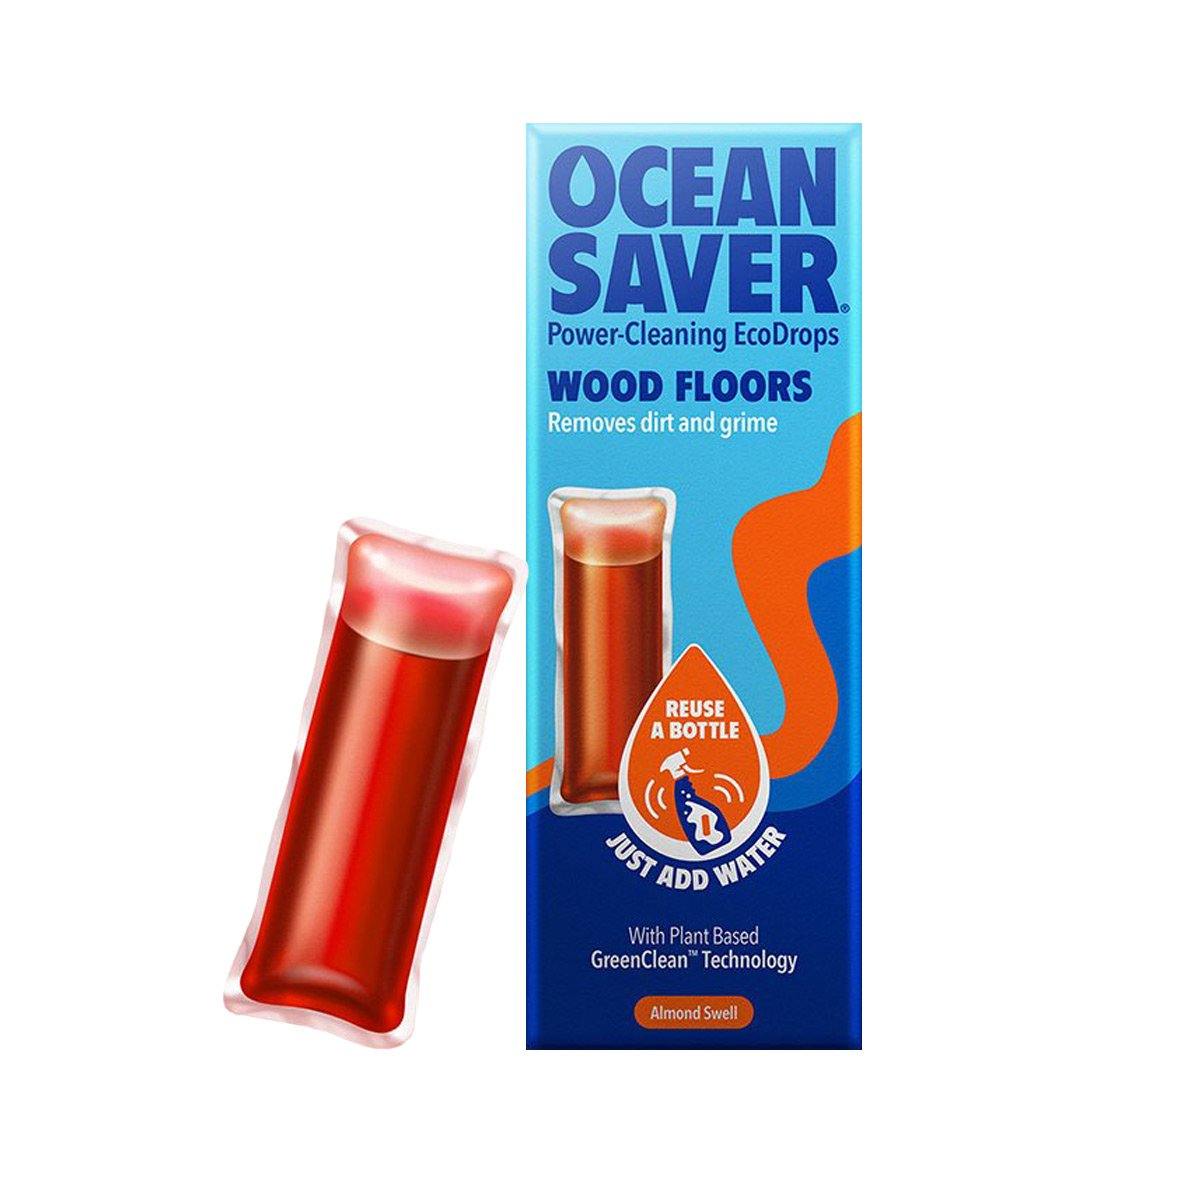 Ocean Saver Refill Wood Floors Almond Swell